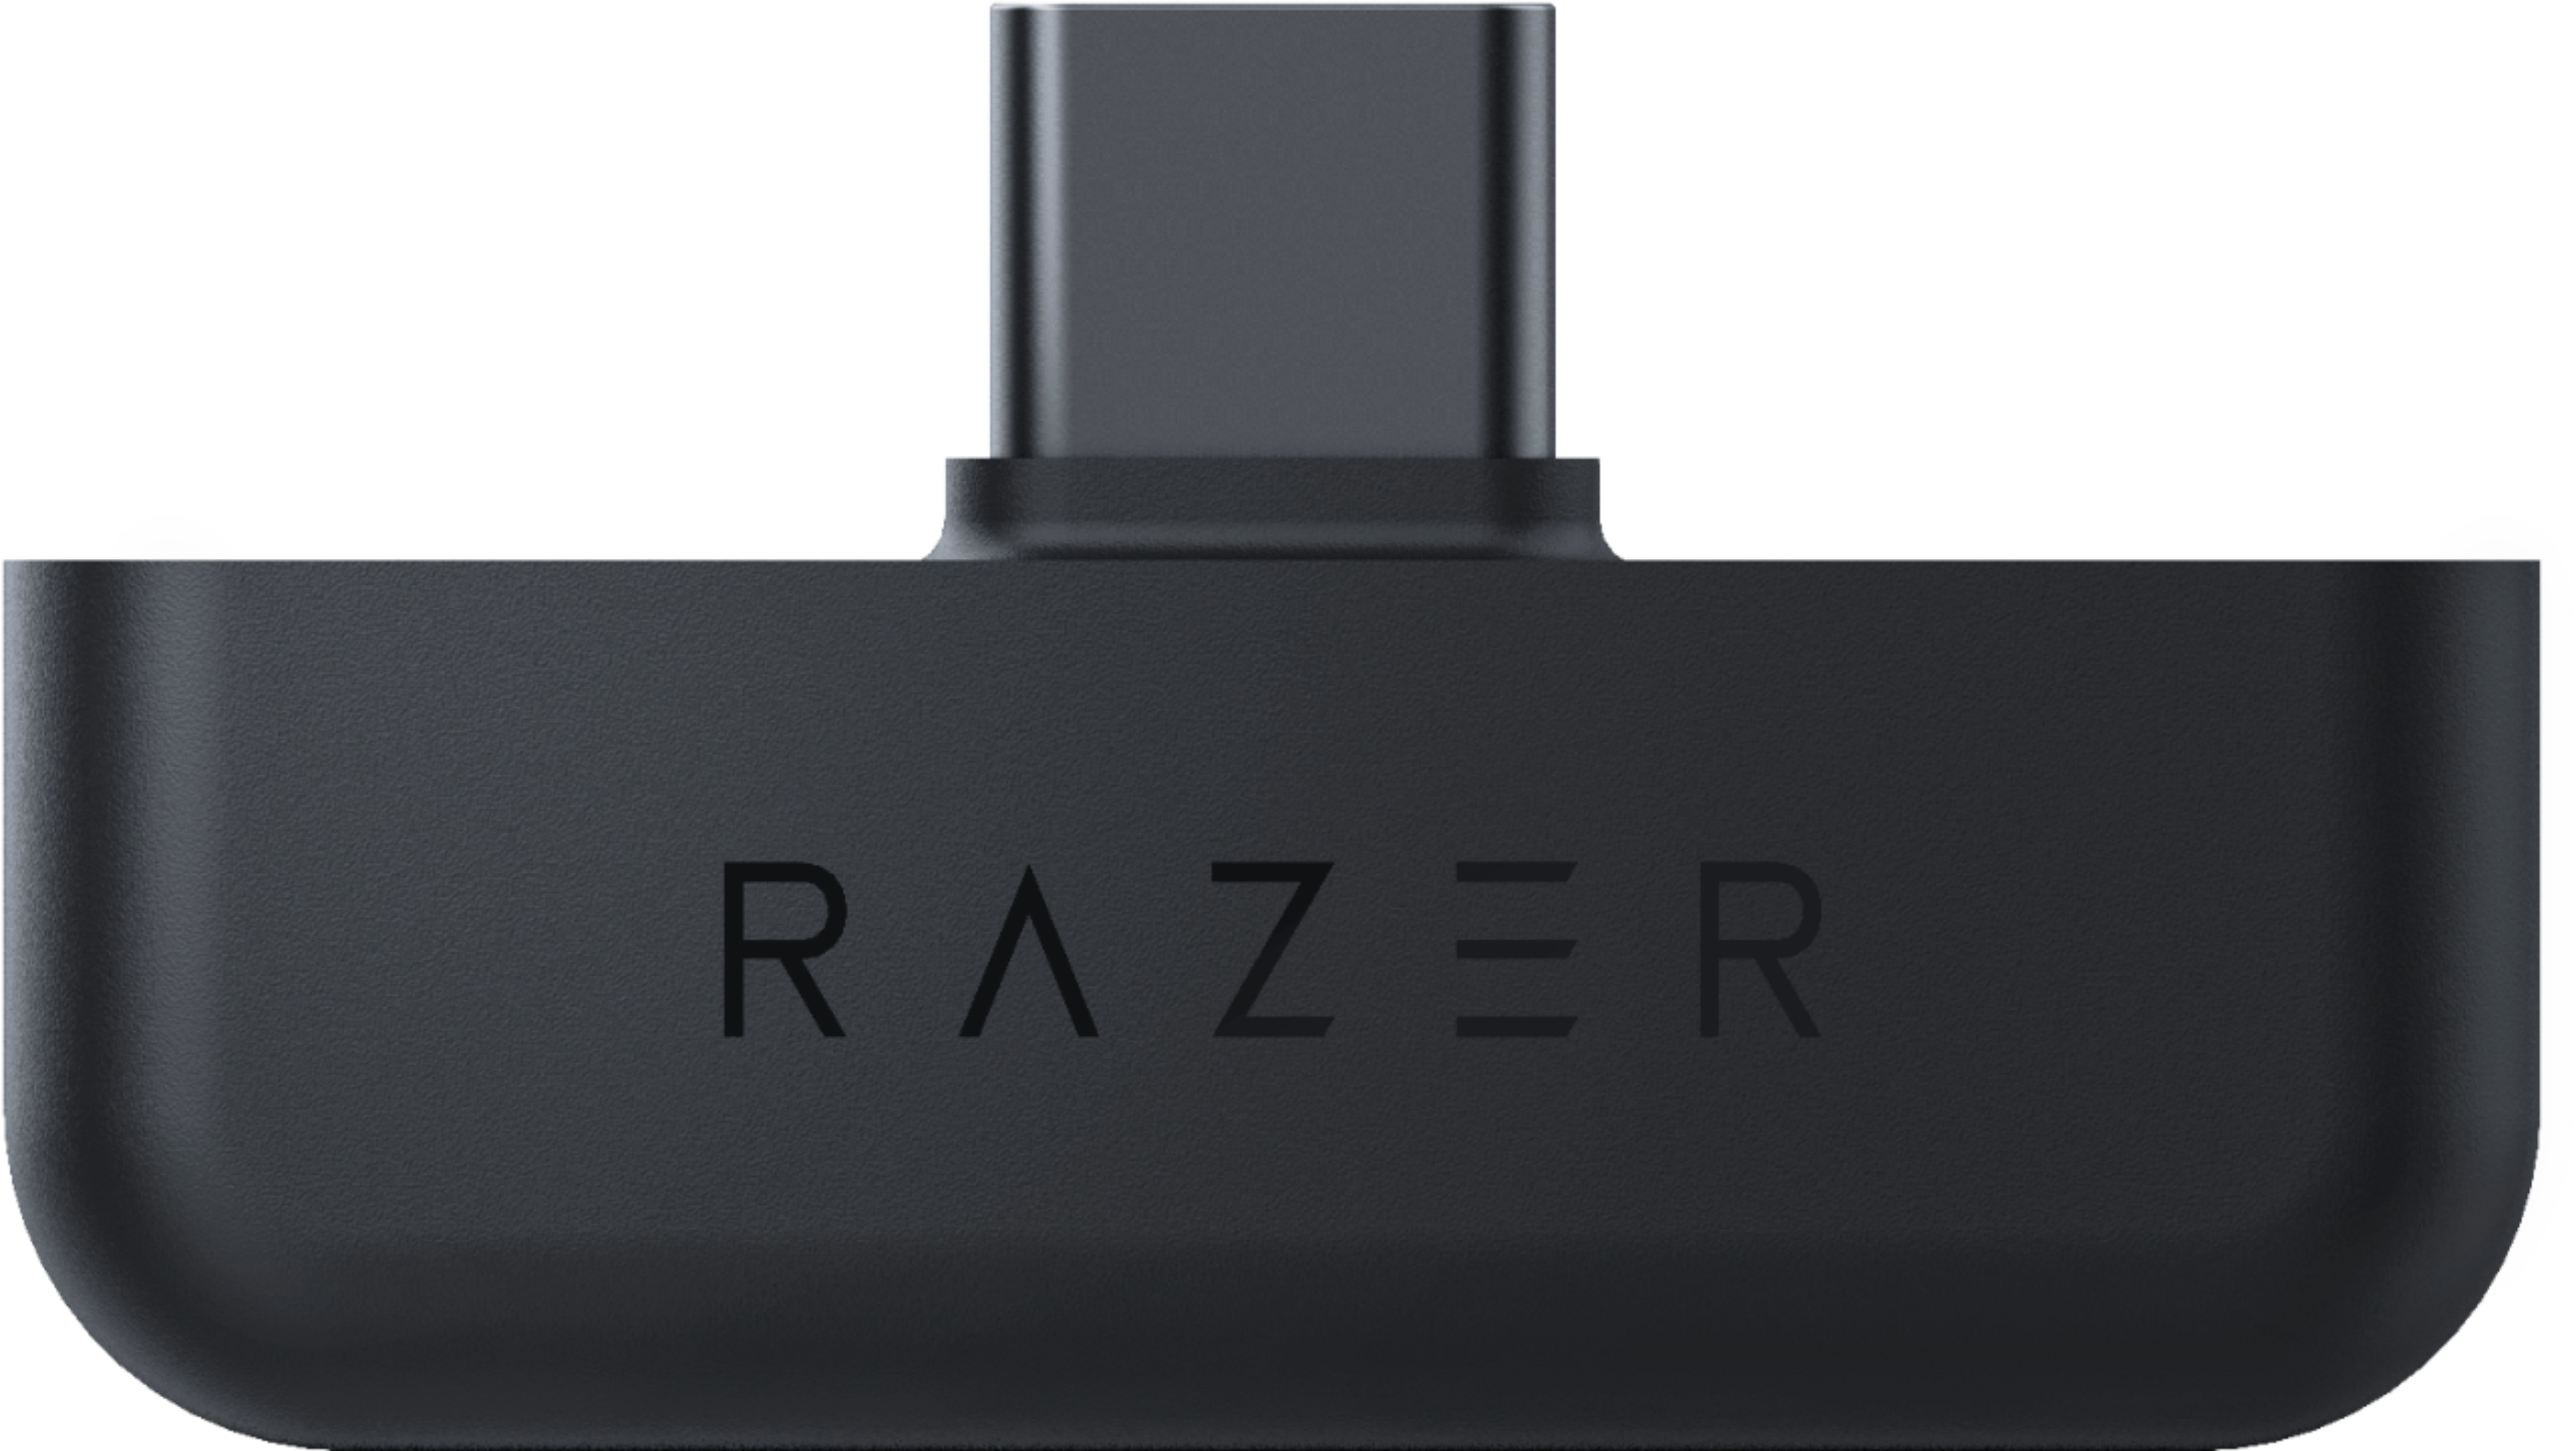 Razer Barracuda X Wireless Multi-Platform Gaming and Mobile Headset (2021  Model): 250g Ergonomic Design - Detachable HyperClear Mic - 20 Hr Battery 